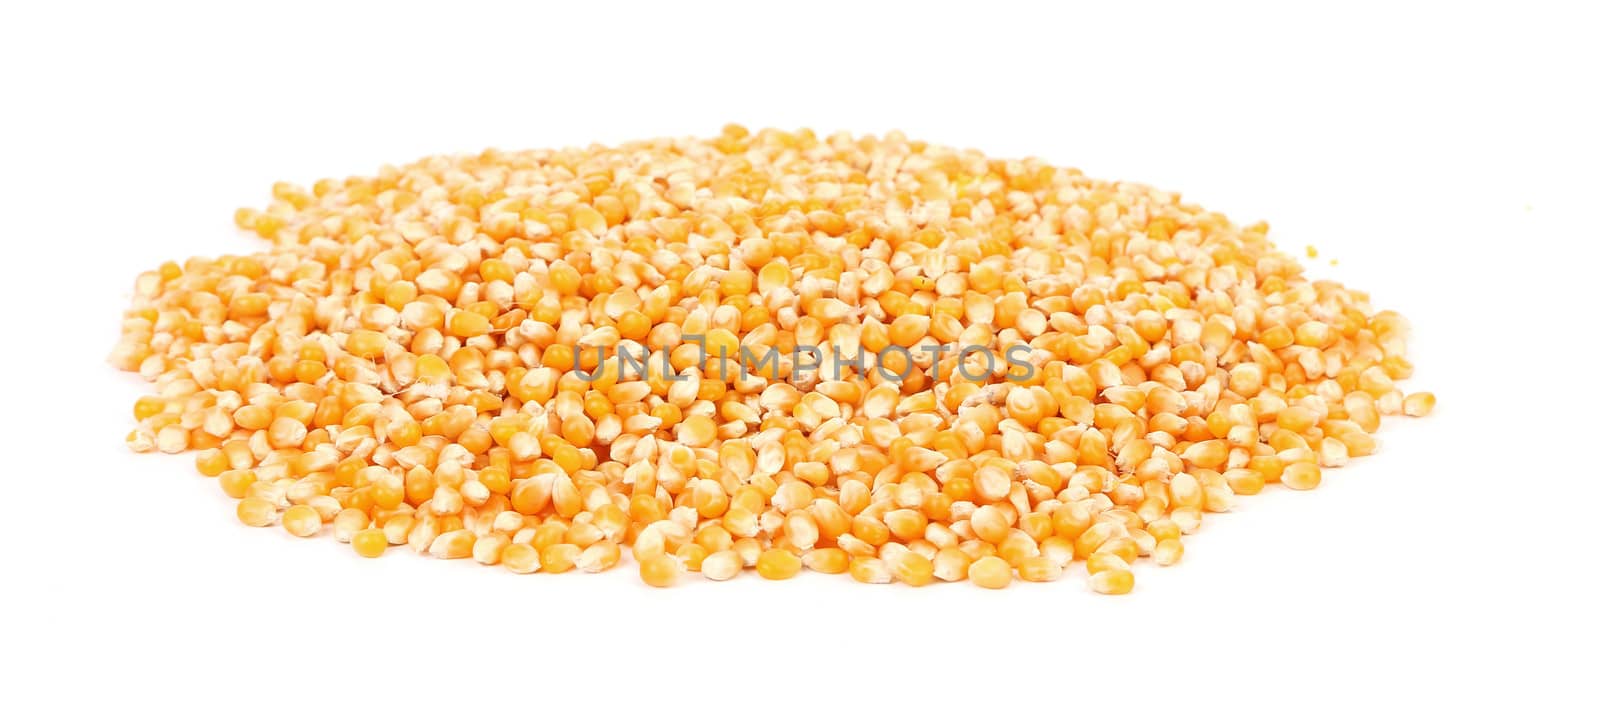 Ripe corn isolated on white background. close up